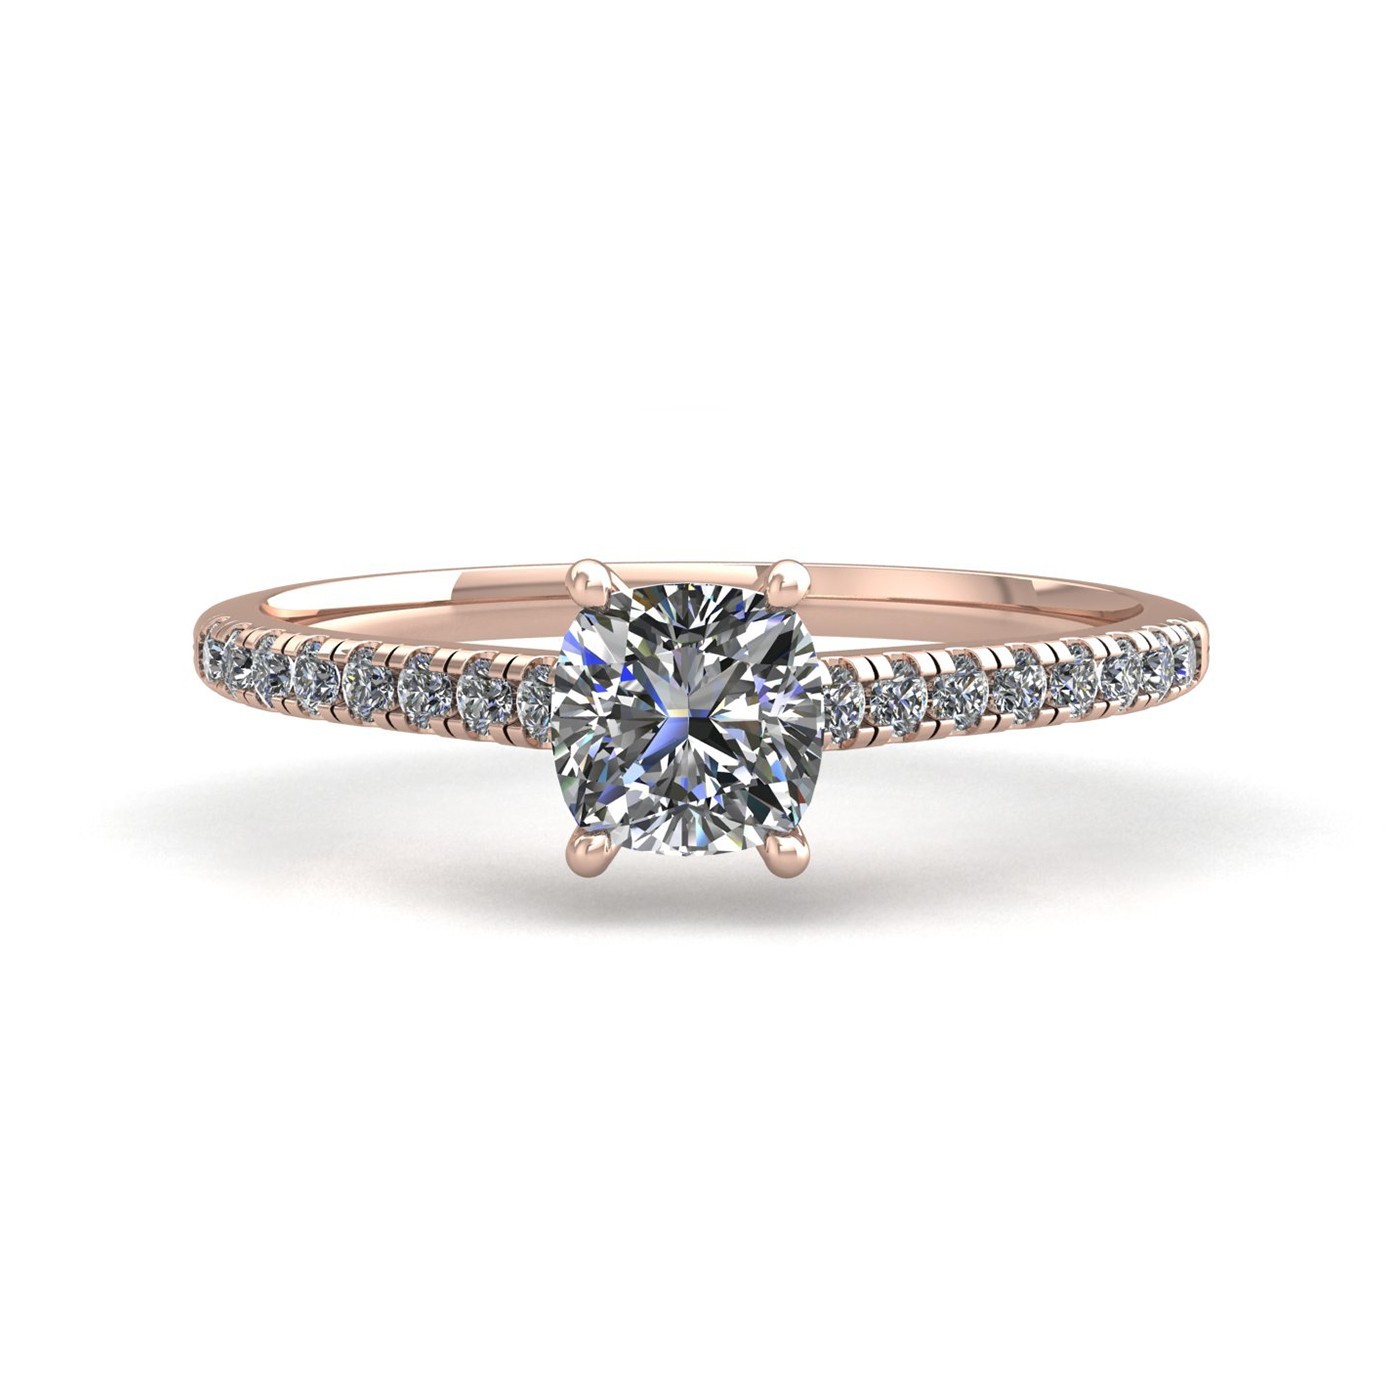 18k rose gold  0,50 ct 4 prongs cushion cut diamond engagement ring with whisper thin pavÉ set band